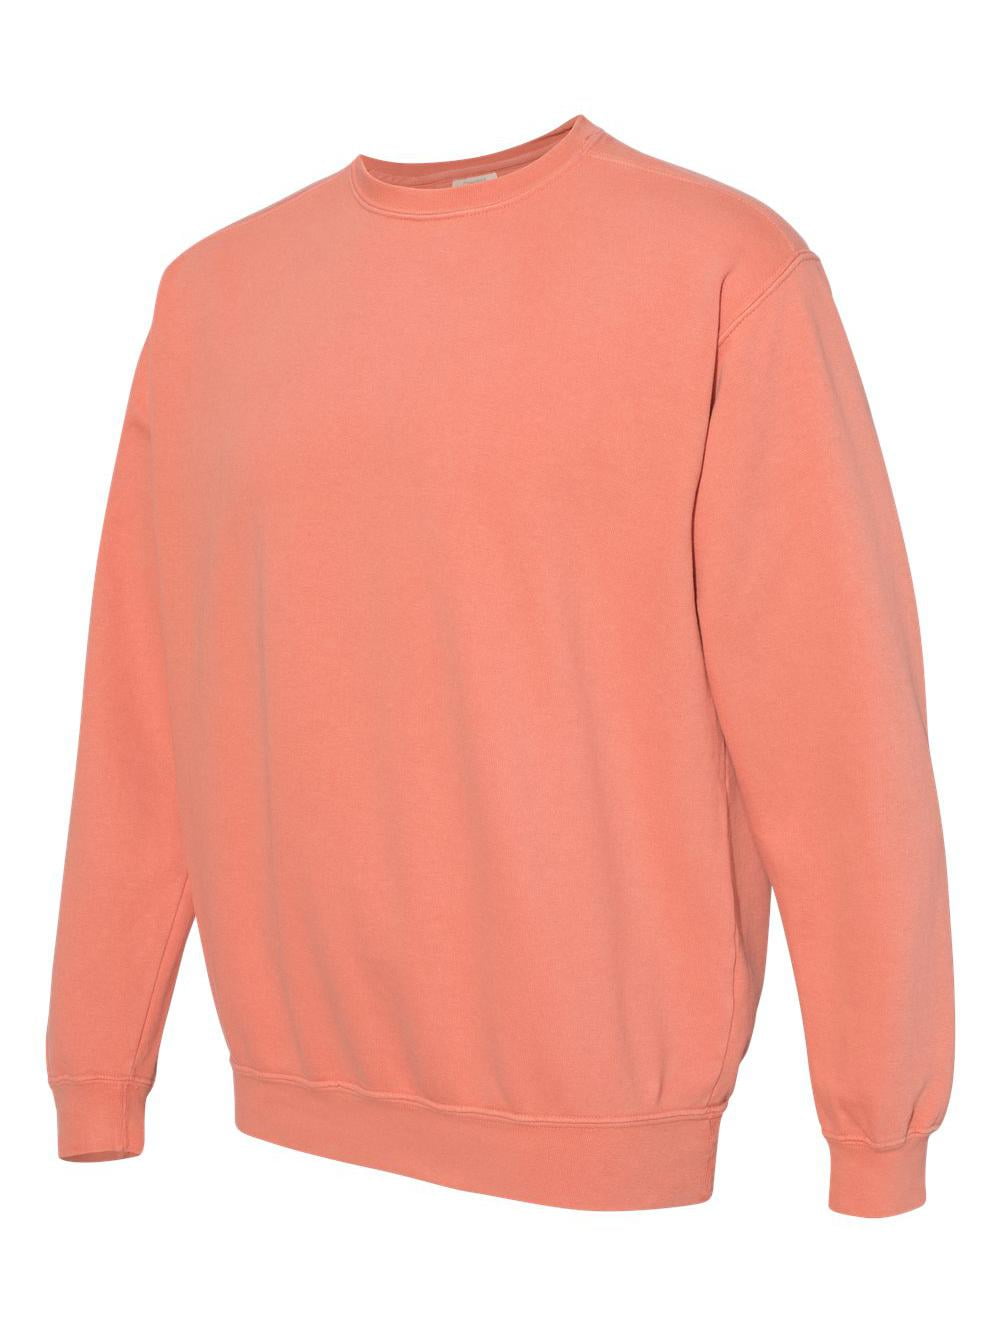 - Colors White Garment-Dyed - S Size: 1566 - - Comfort Sweatshirt